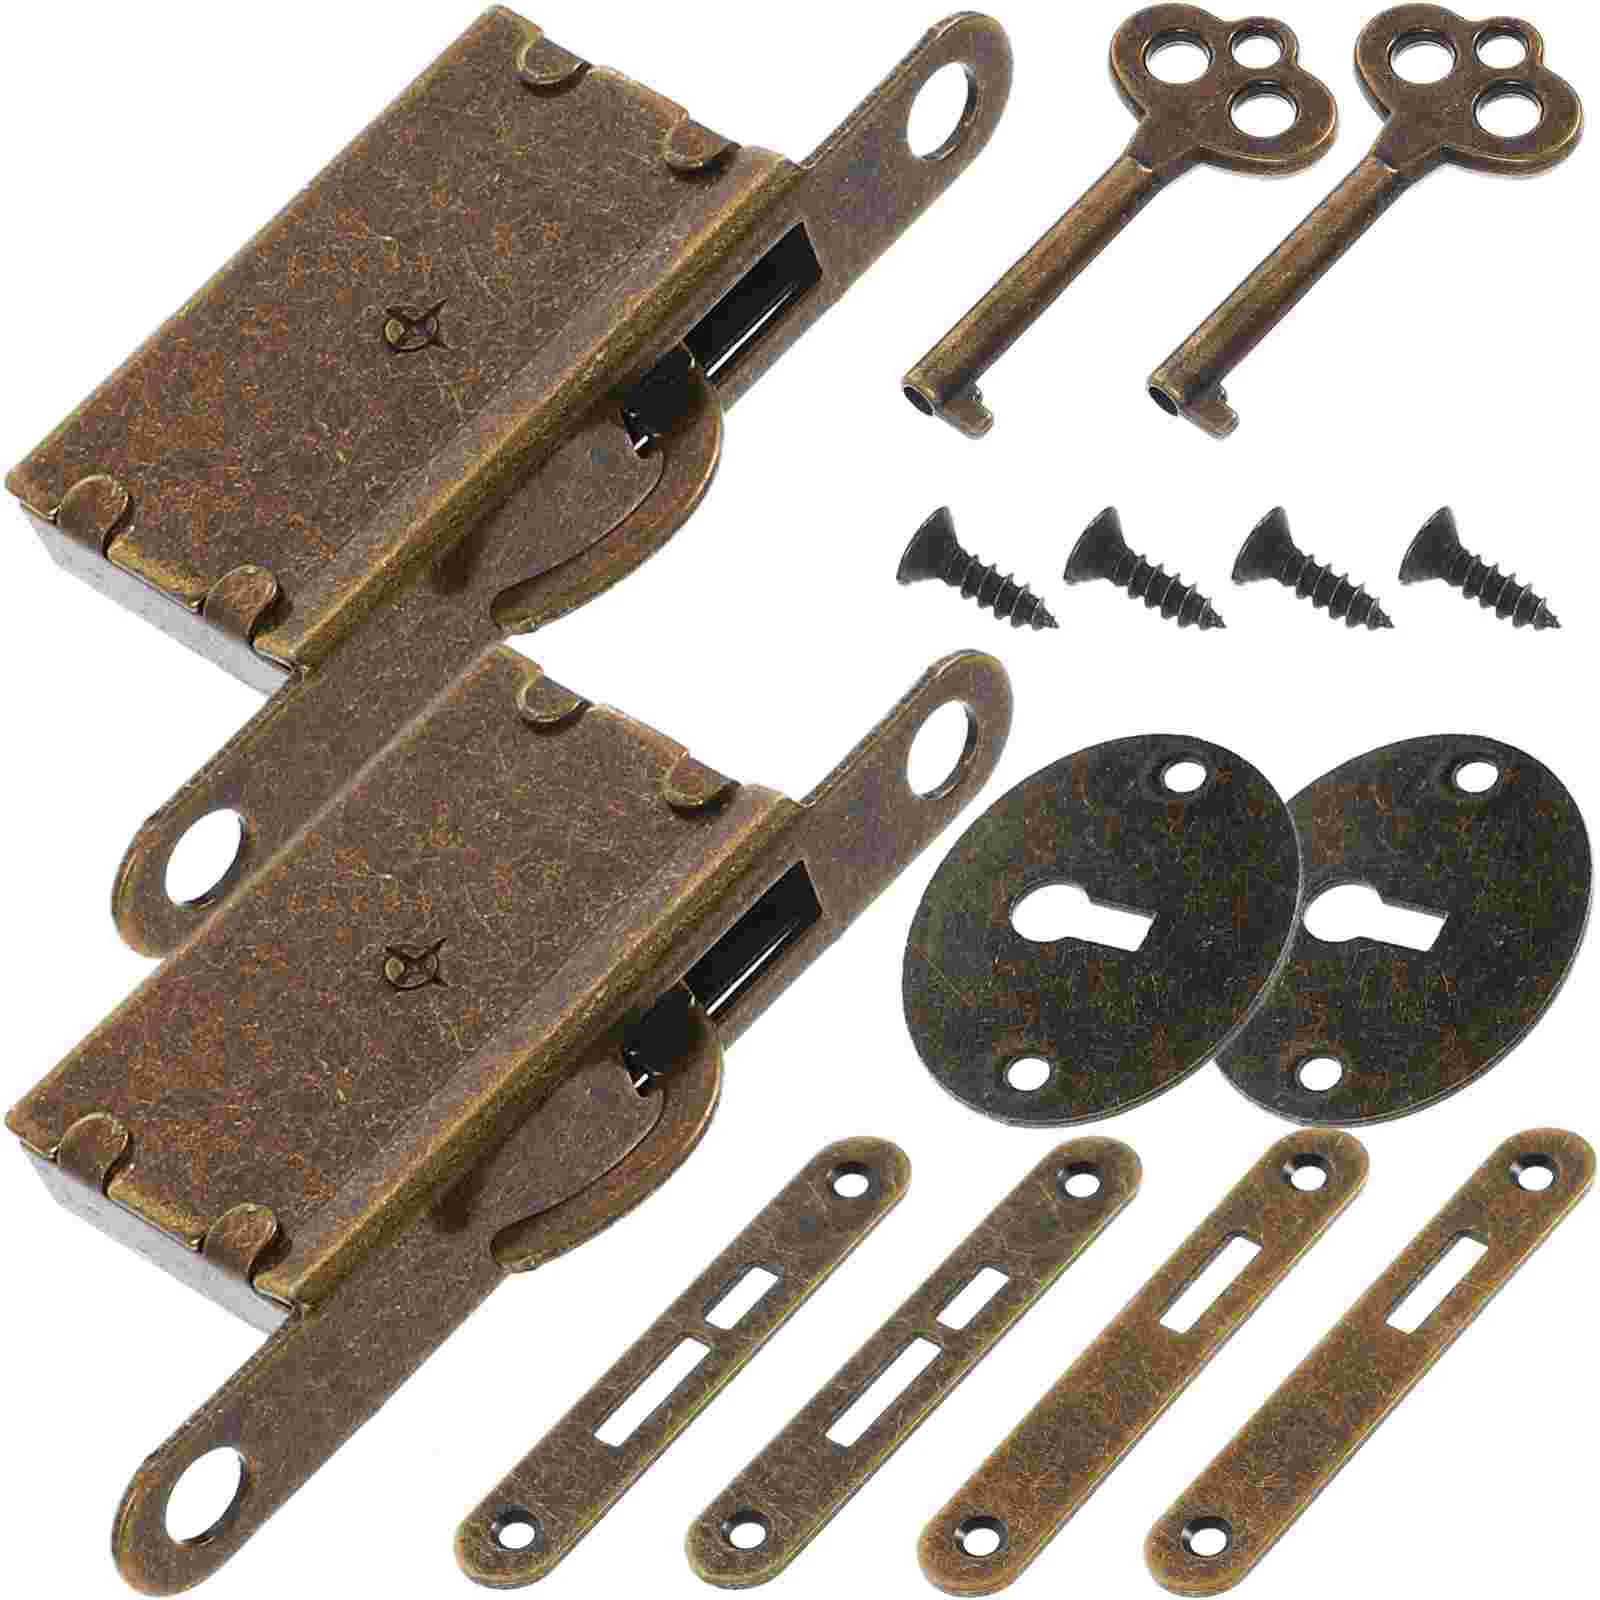 

2 Sets Wooden Box Hardware Accessories Decor Lock Key Boxes Mini Locks with Keys Case Drawer Decorative Zinc Alloy